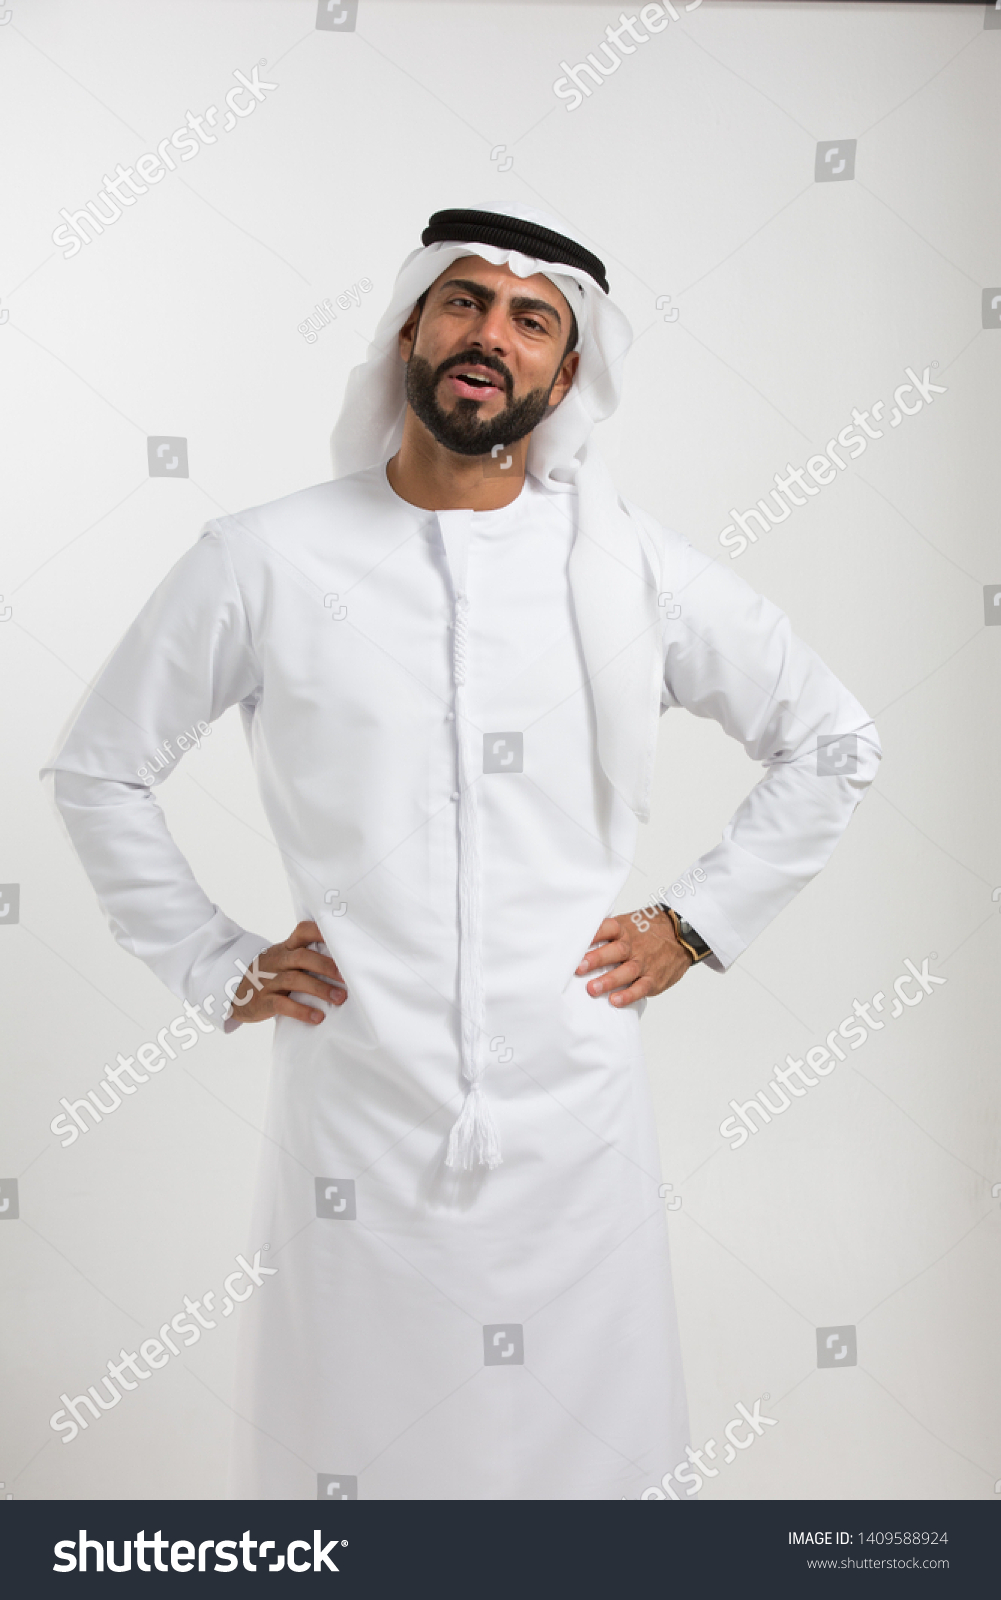 Portrait of an arab man. #1409588924